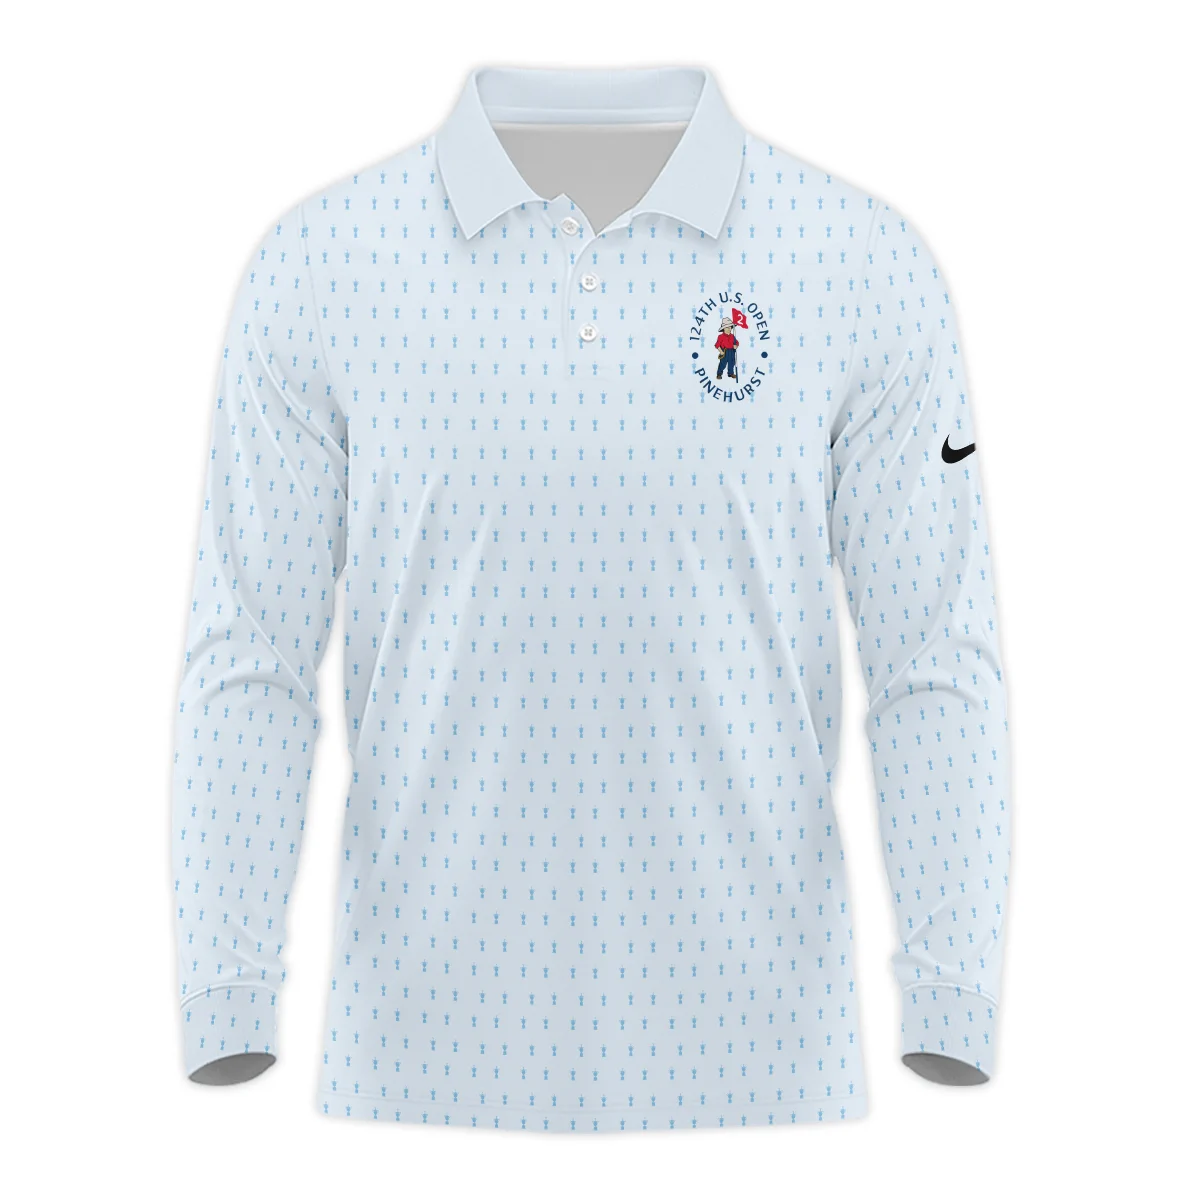 Golf Pattern Cup Light Blue Green 124th U.S. Open Pinehurst Nike Polo Shirt Style Classic Polo Shirt For Men